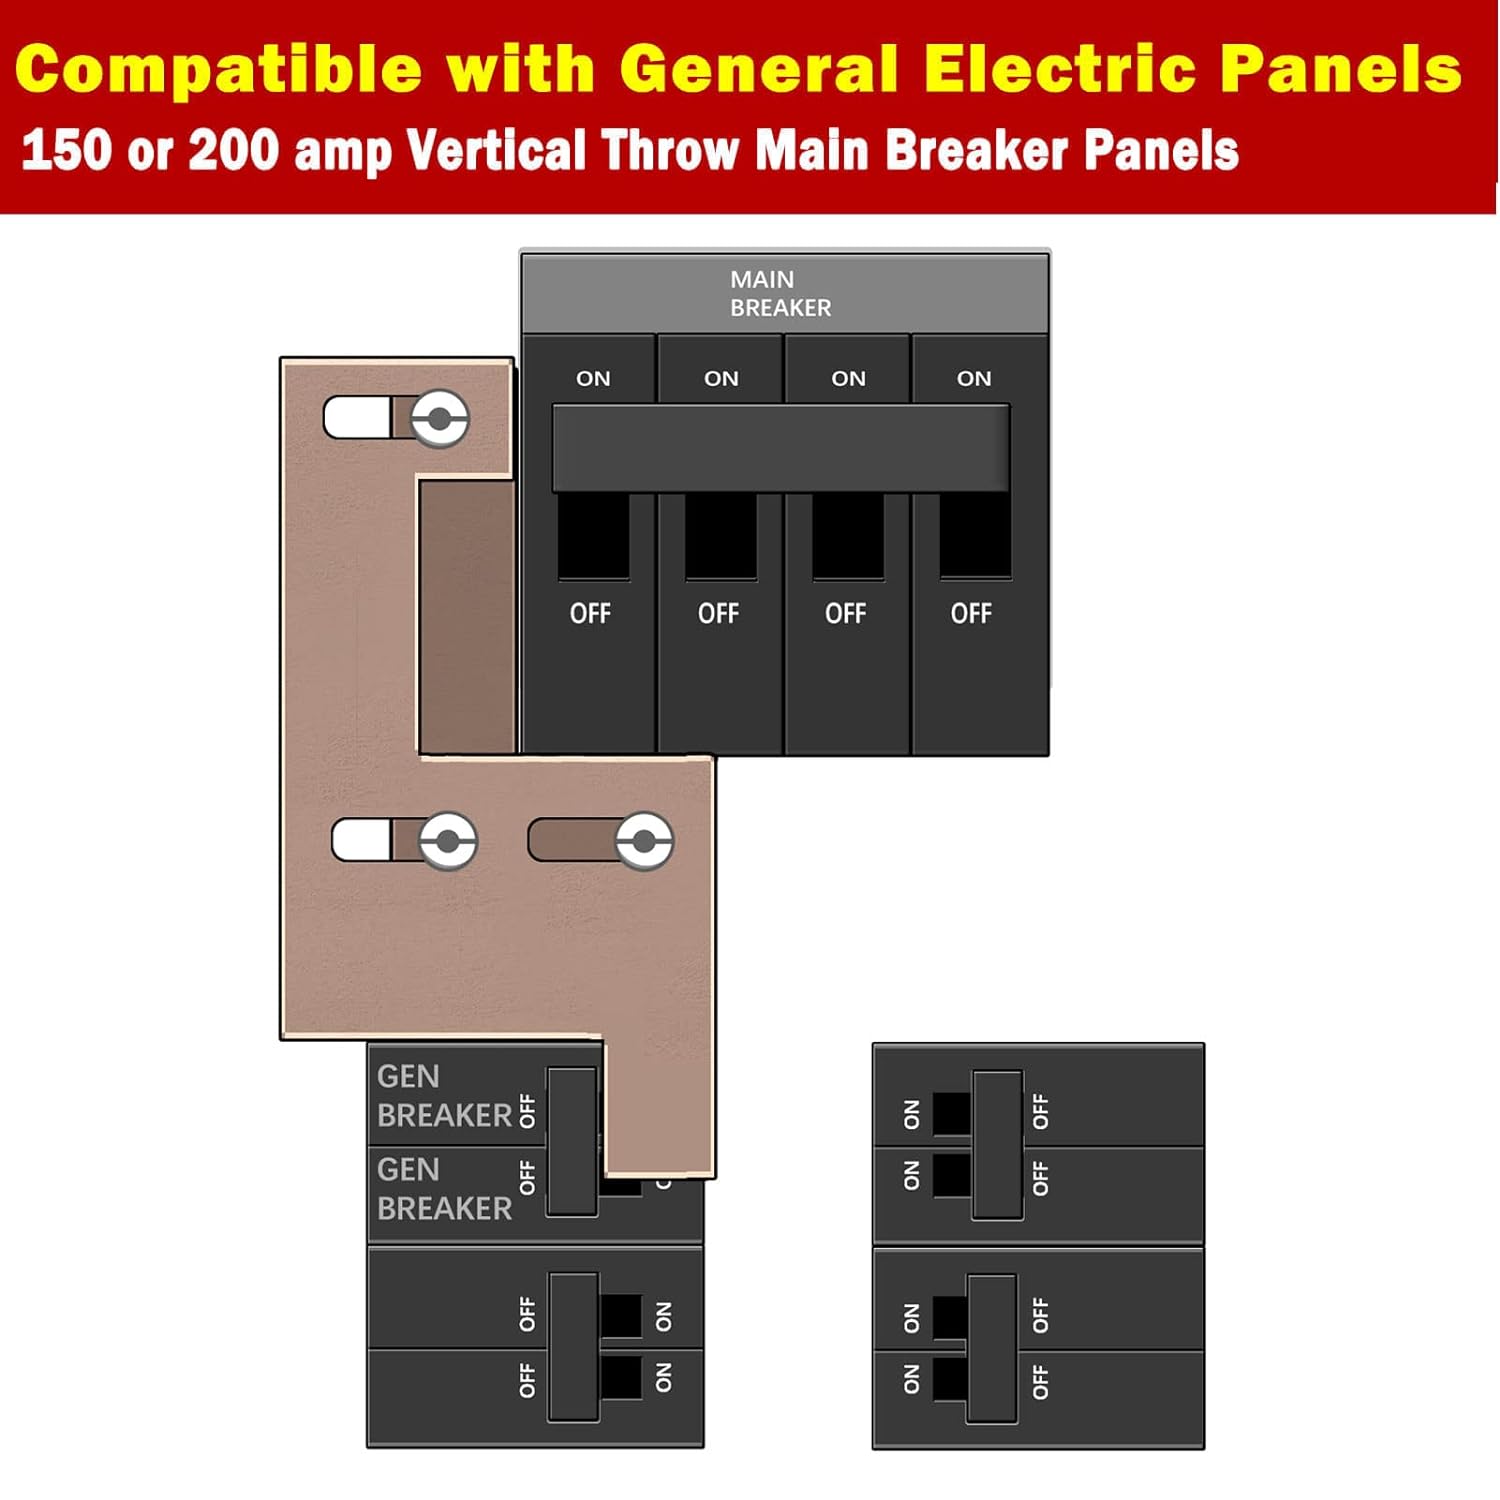 Generic Generator Interlock Kit Compatible with GE General Electeric Vertical Main 150 and 200 AMP Panels, 2 1/4 Inch Spacing Between M